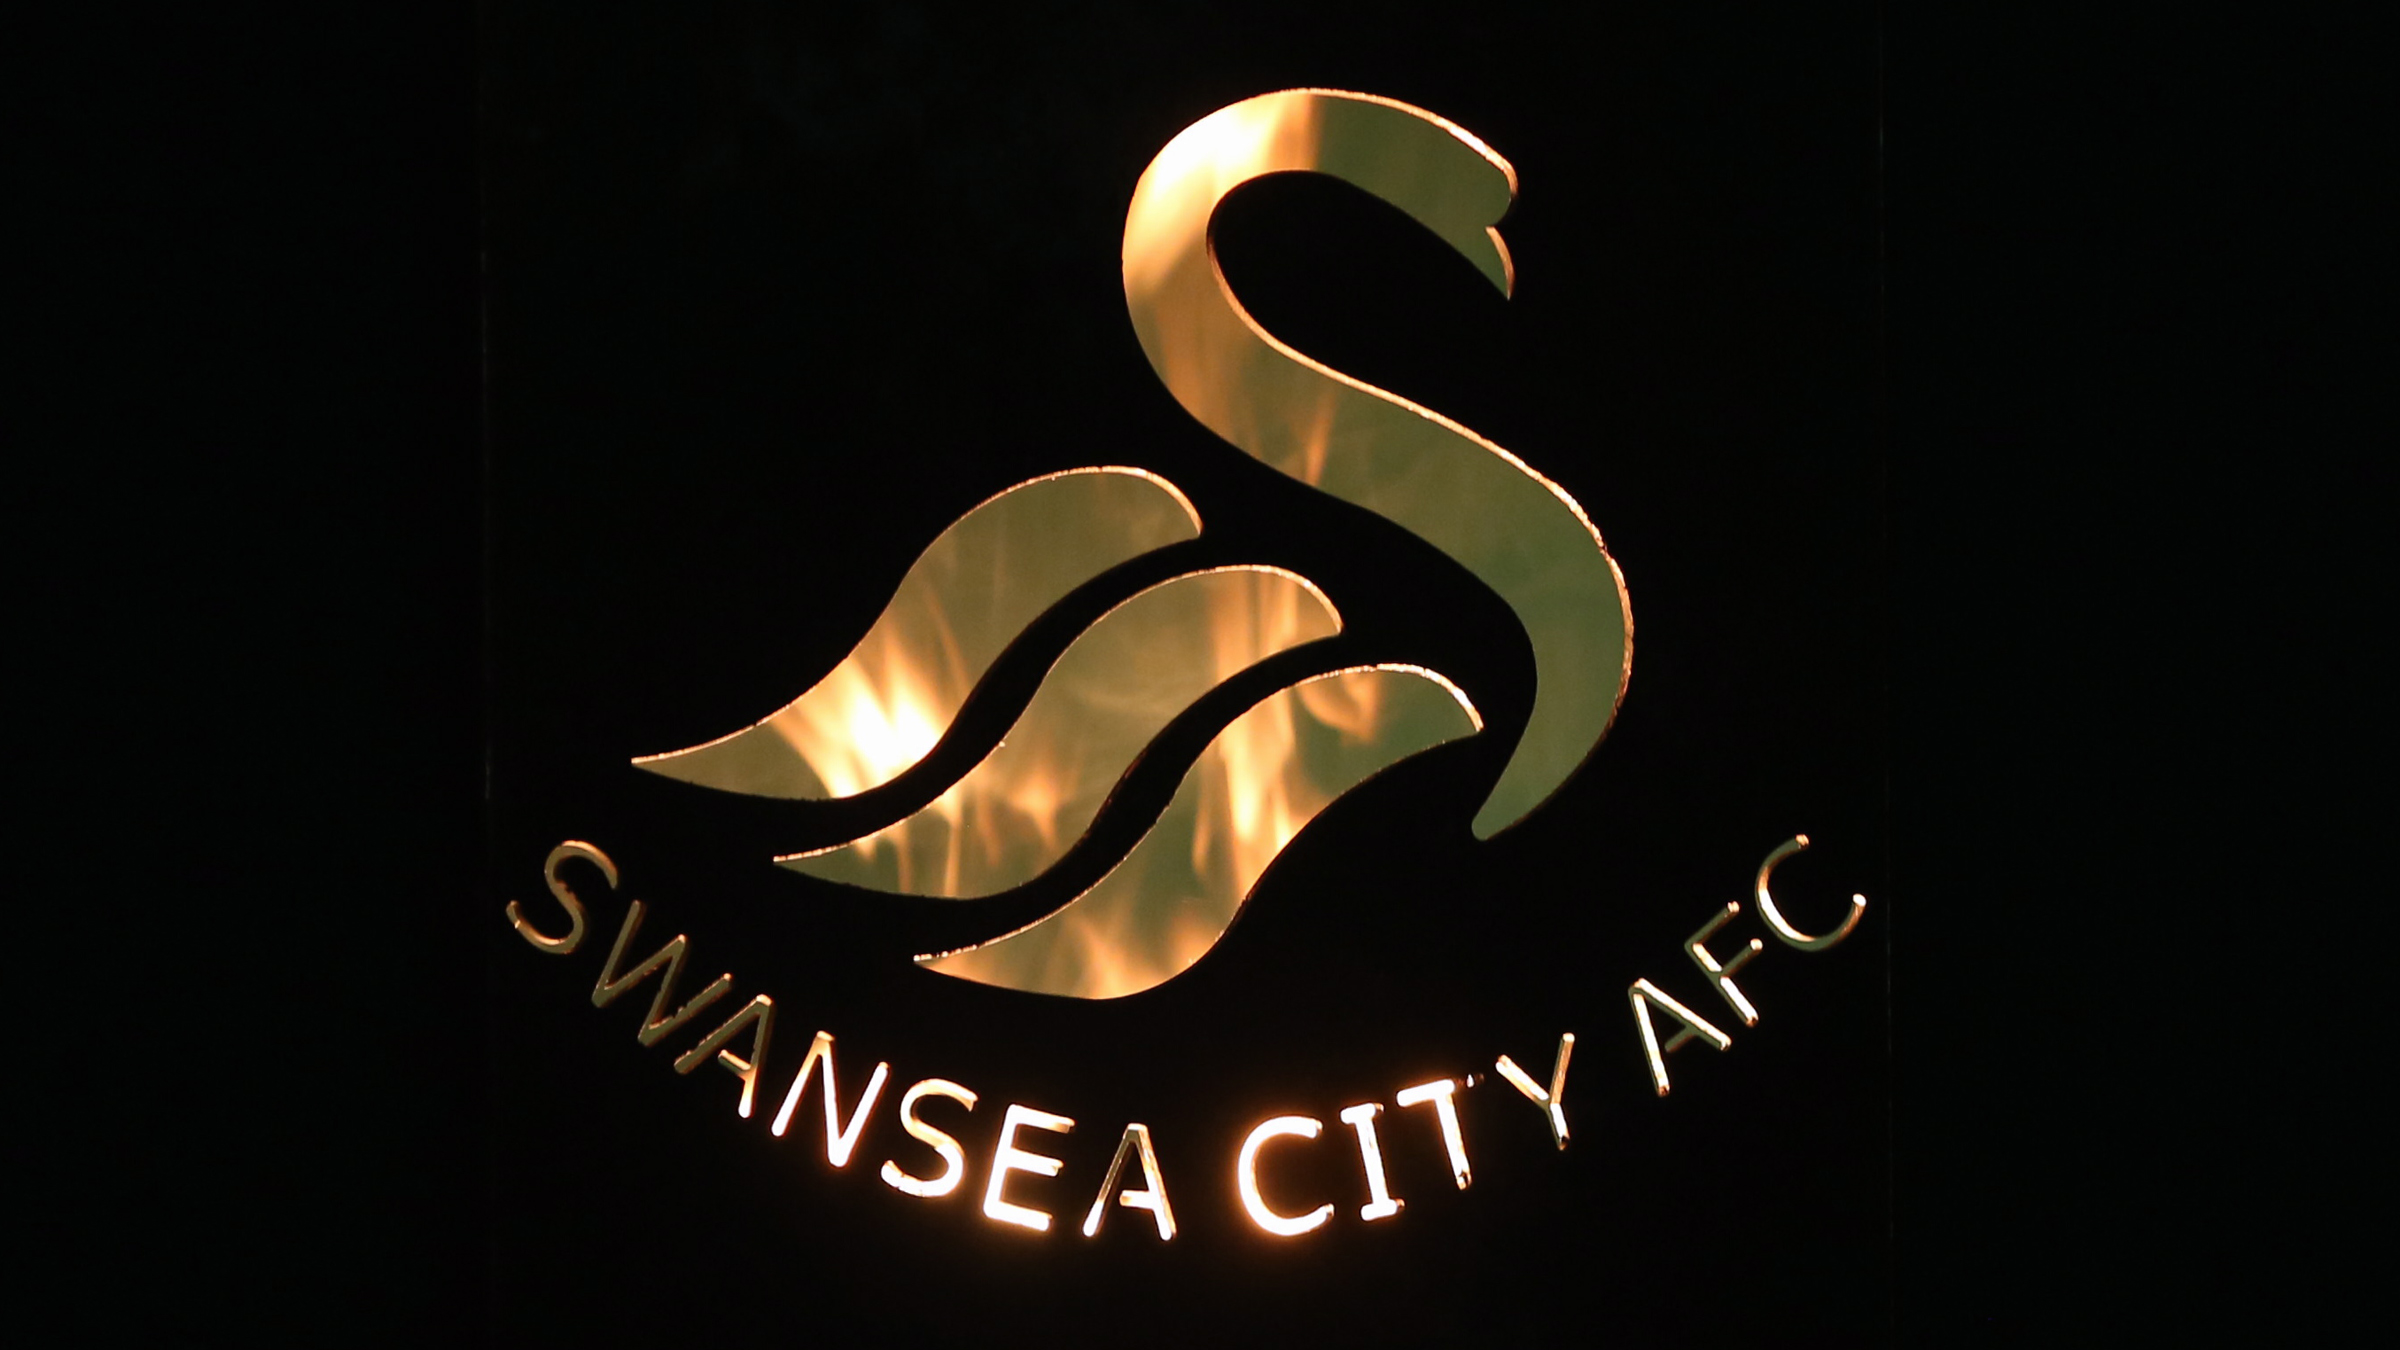 swansea city travel club